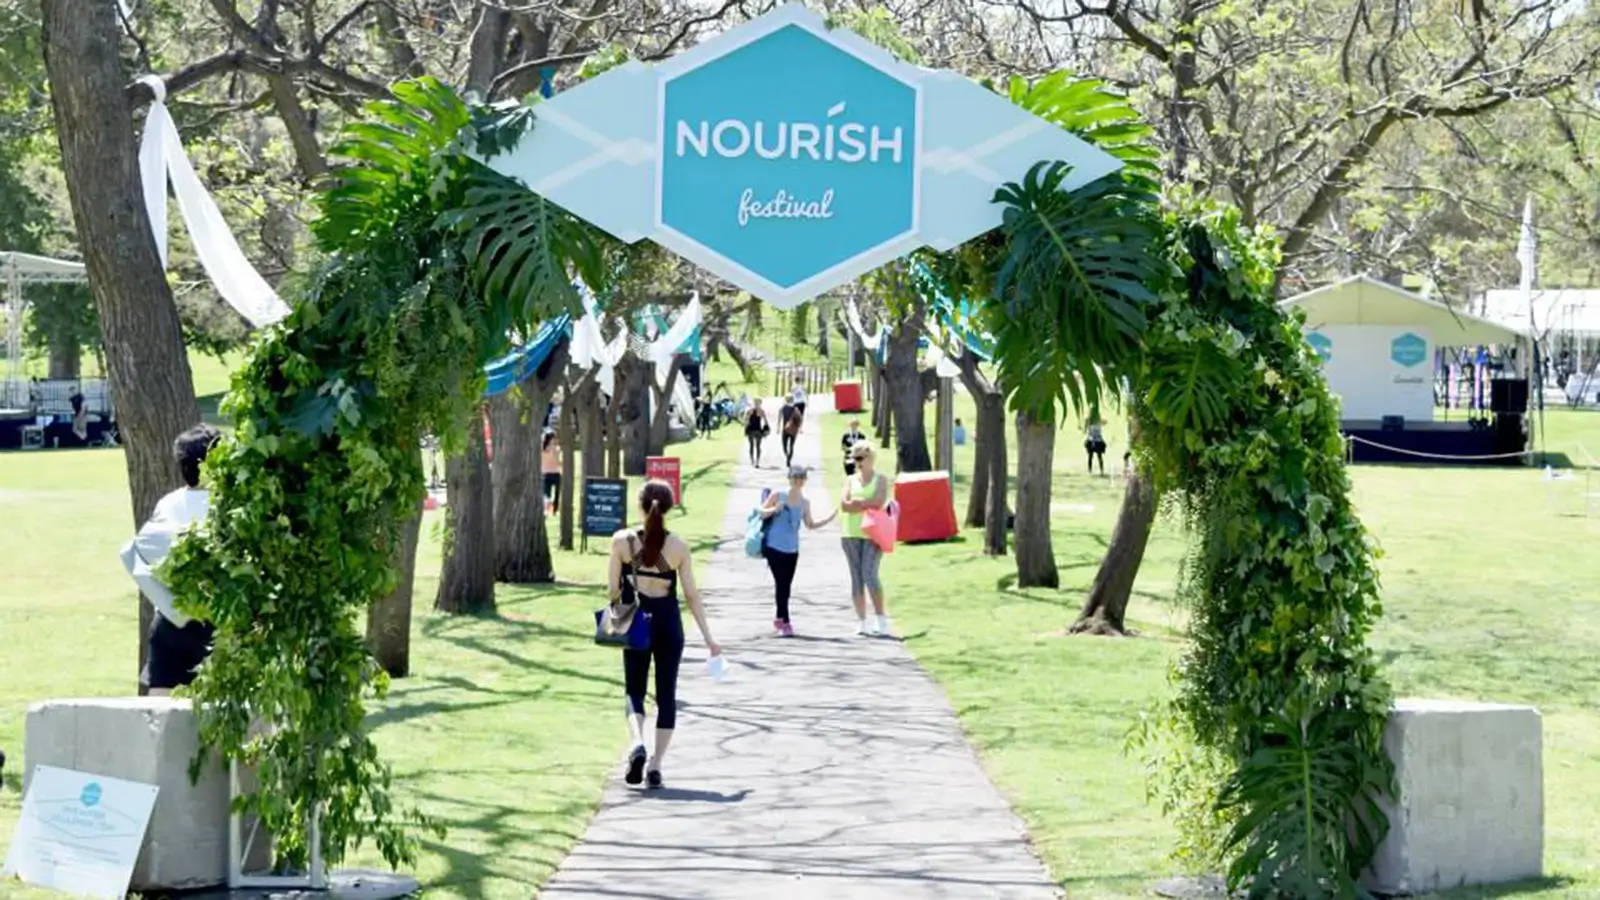 Nourish Festival event signage archway.